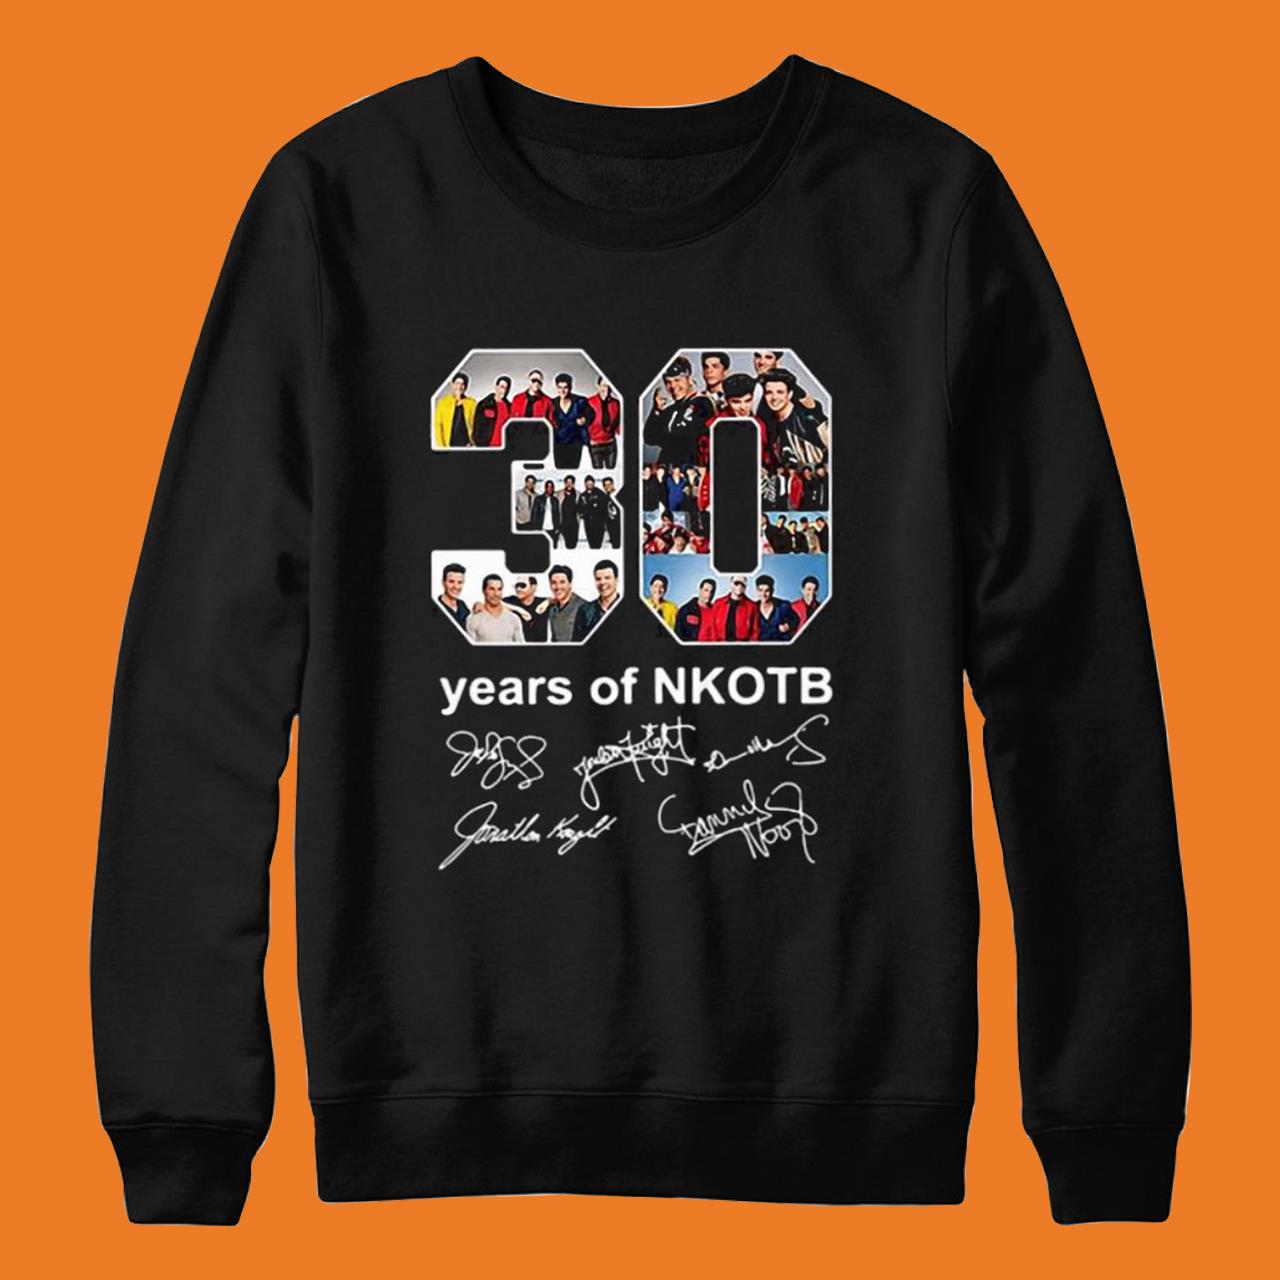 30 Years Of NKOTB New Kids On The Block Signature T-Shirt